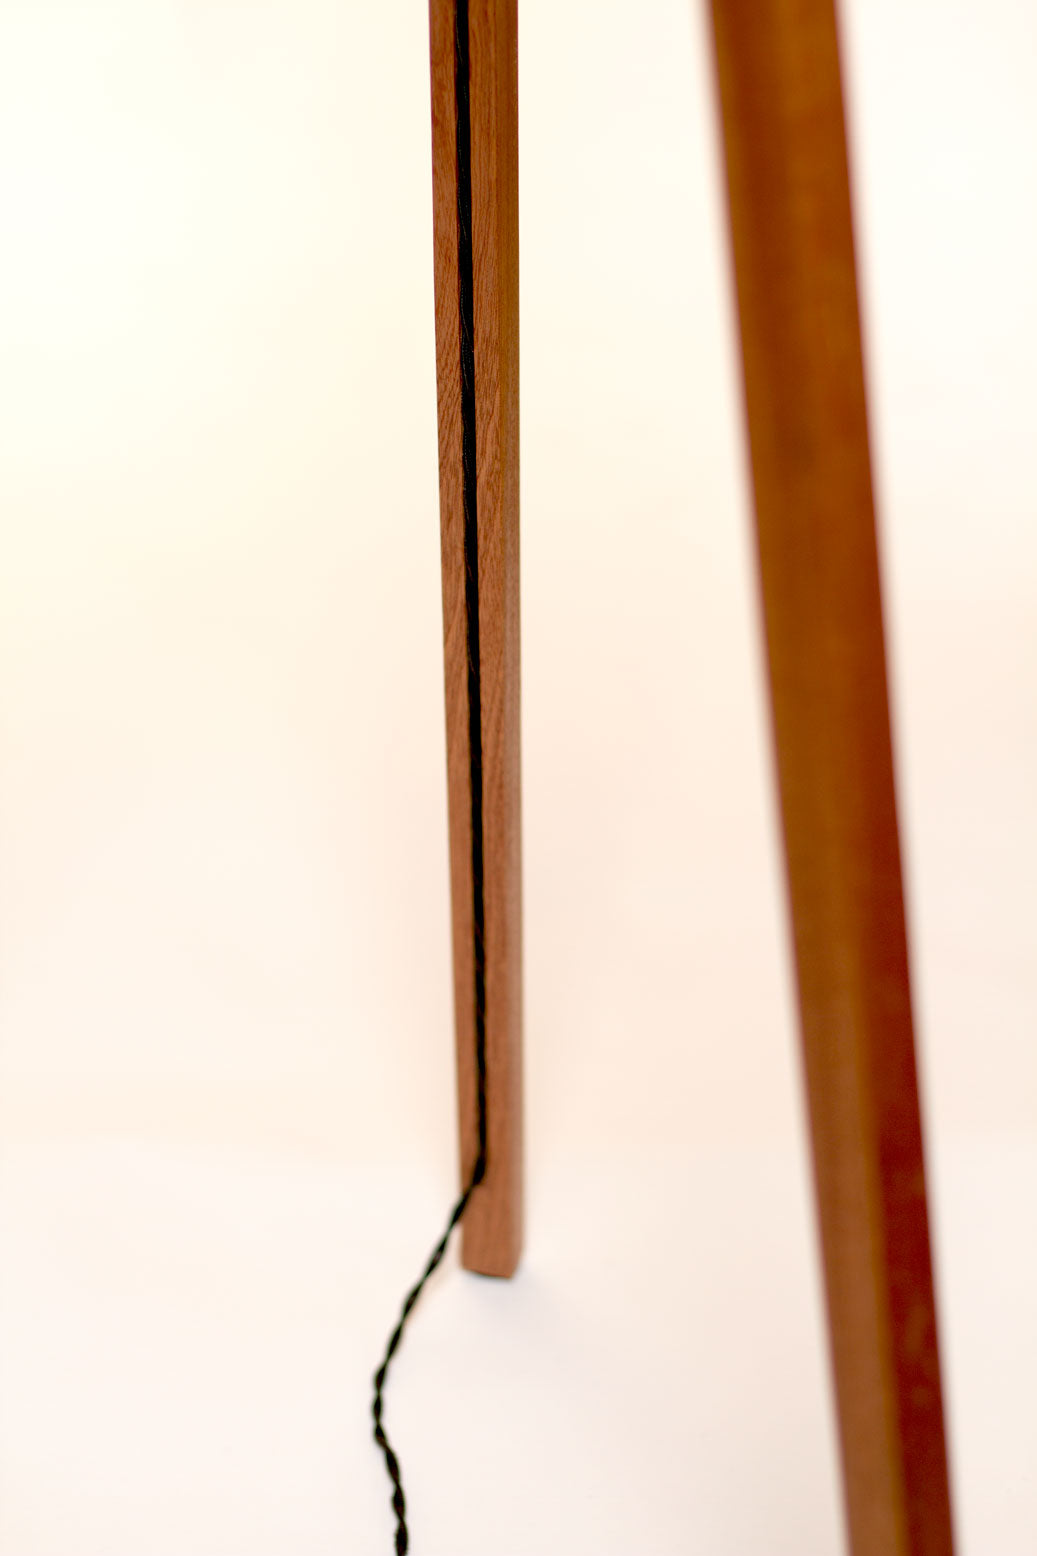 Sapele Tripod Floor Lamp - P08 - Batik Stripes Grey